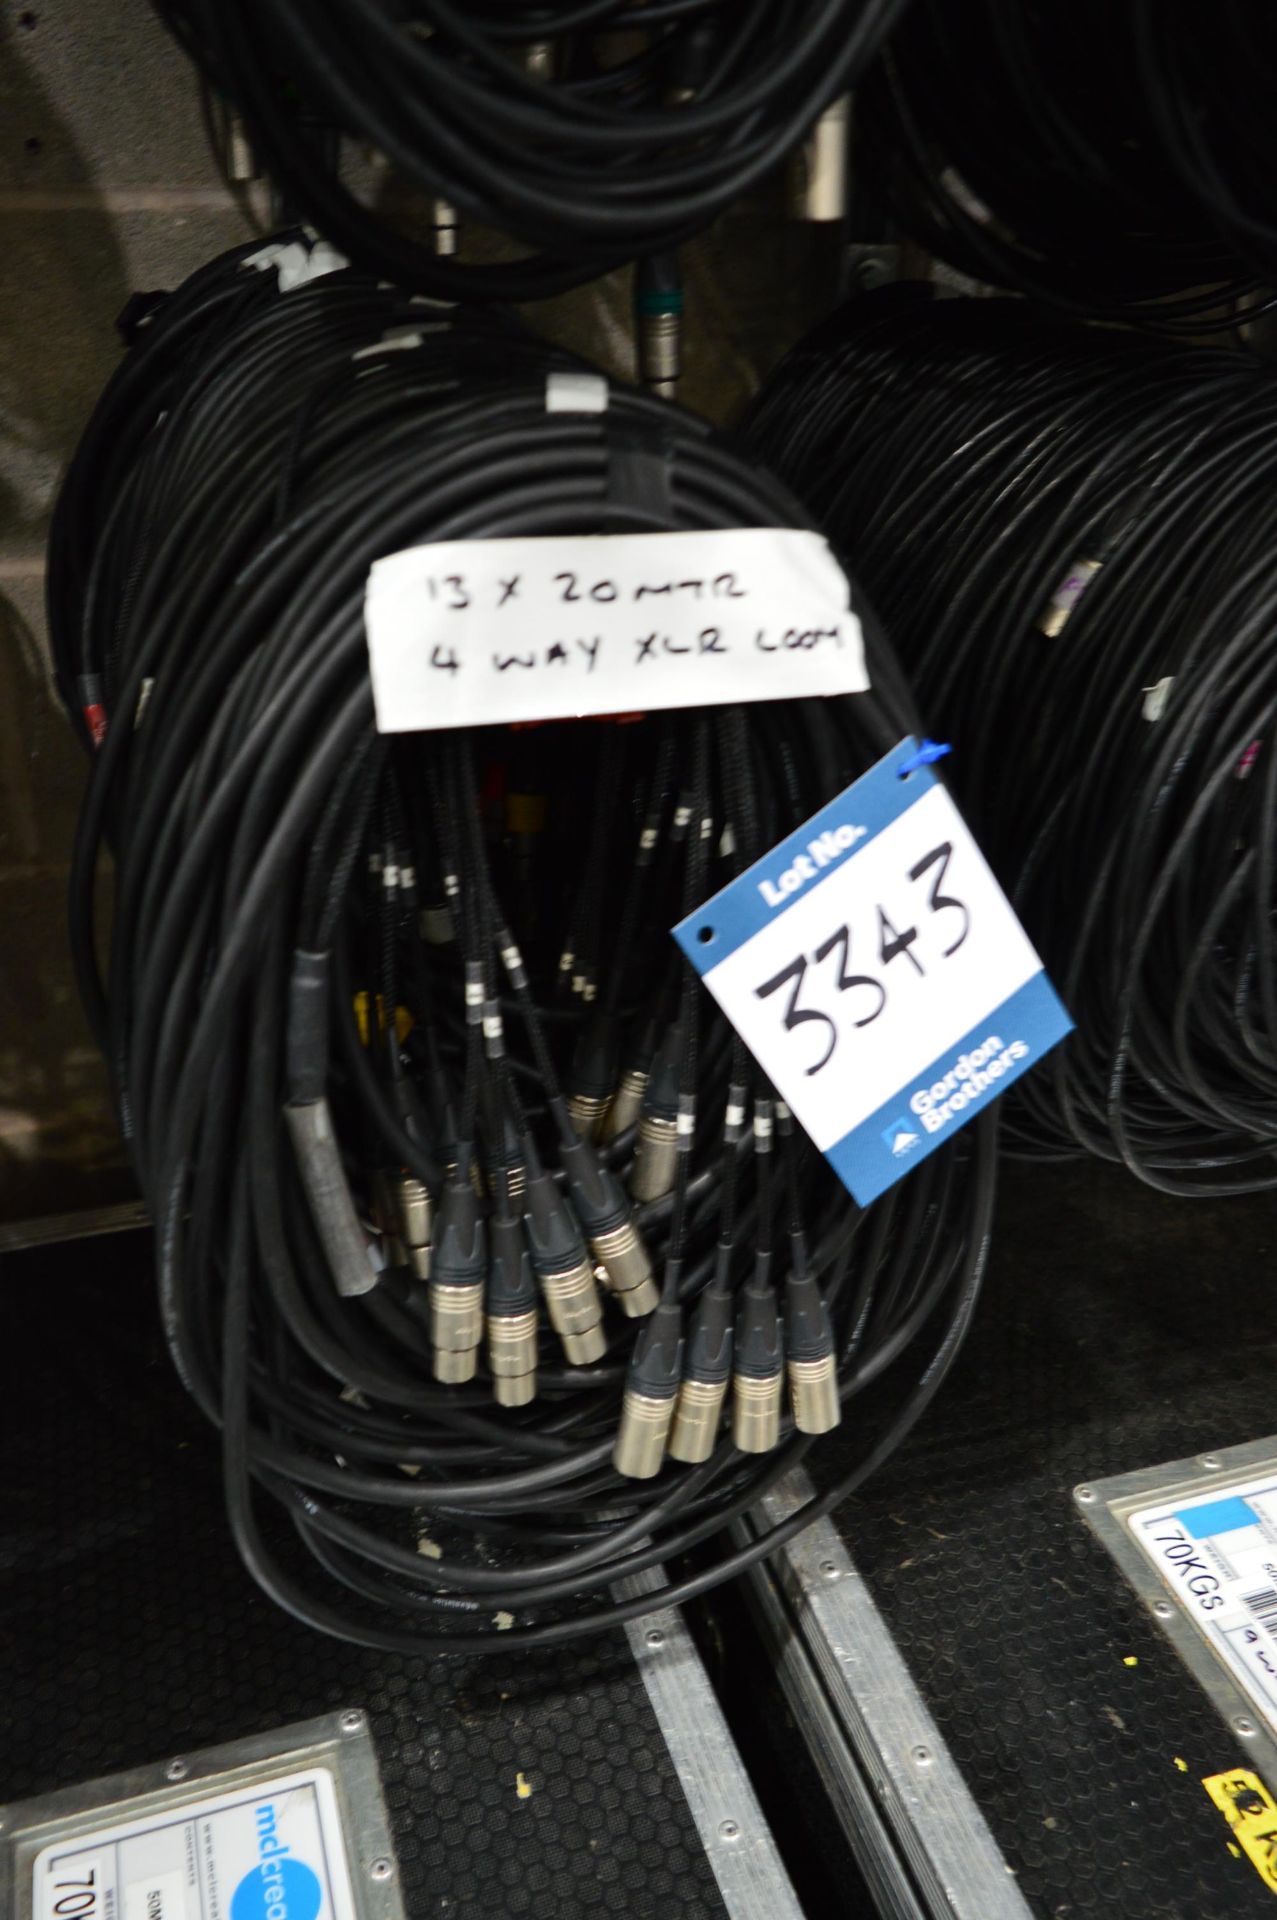 13x 20m 4-way XLR loom cables: Unit 500, Eckersall Road, Birmingham B38 8SE